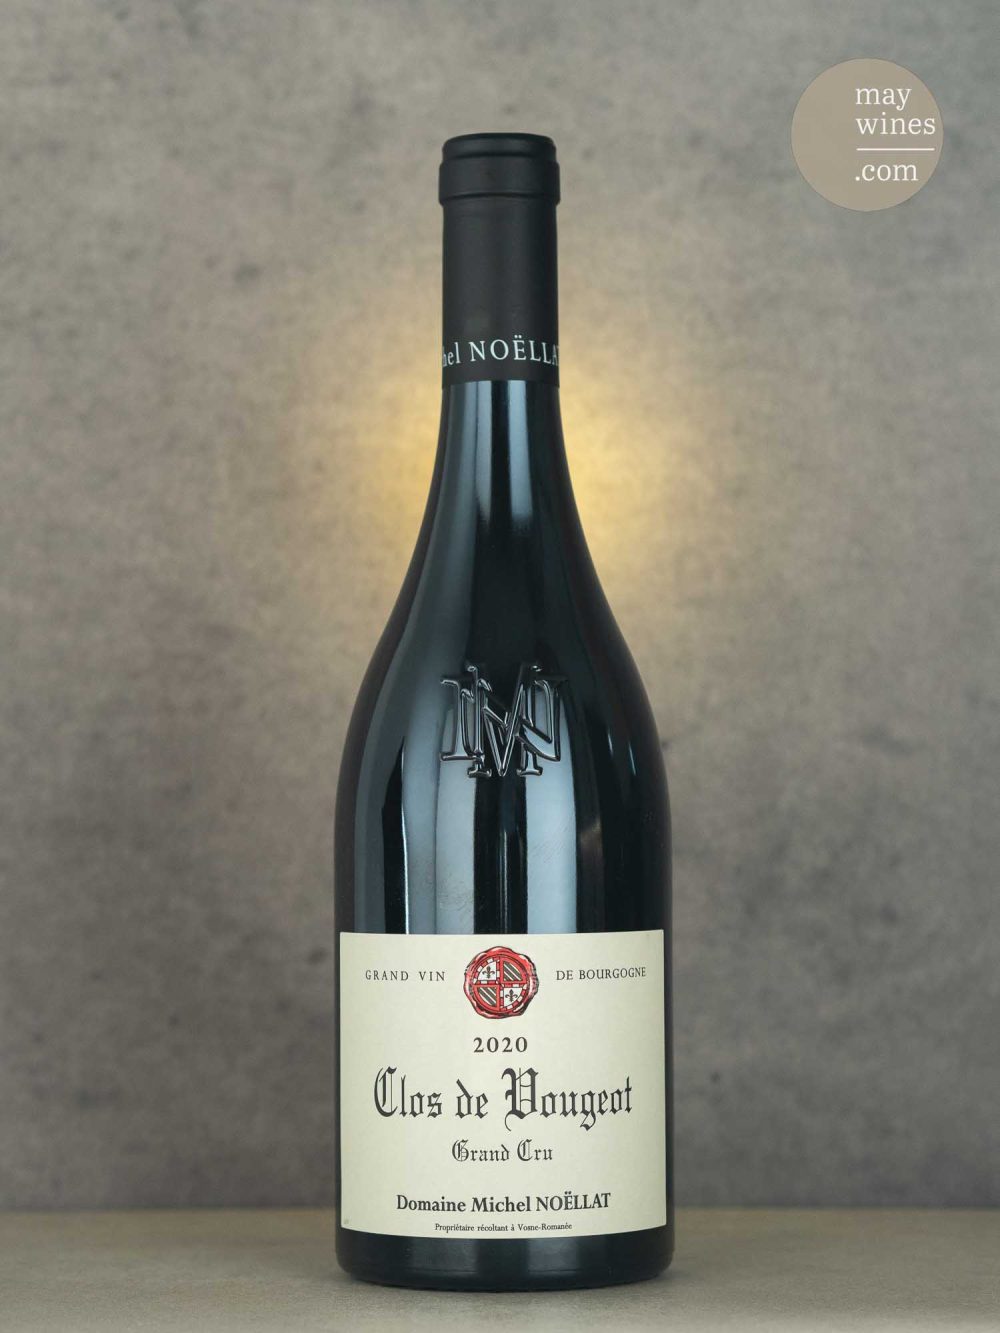 May Wines – Rotwein – 2020 Clos de Vougeot Grand Cru - Domaine Michel Noëllat